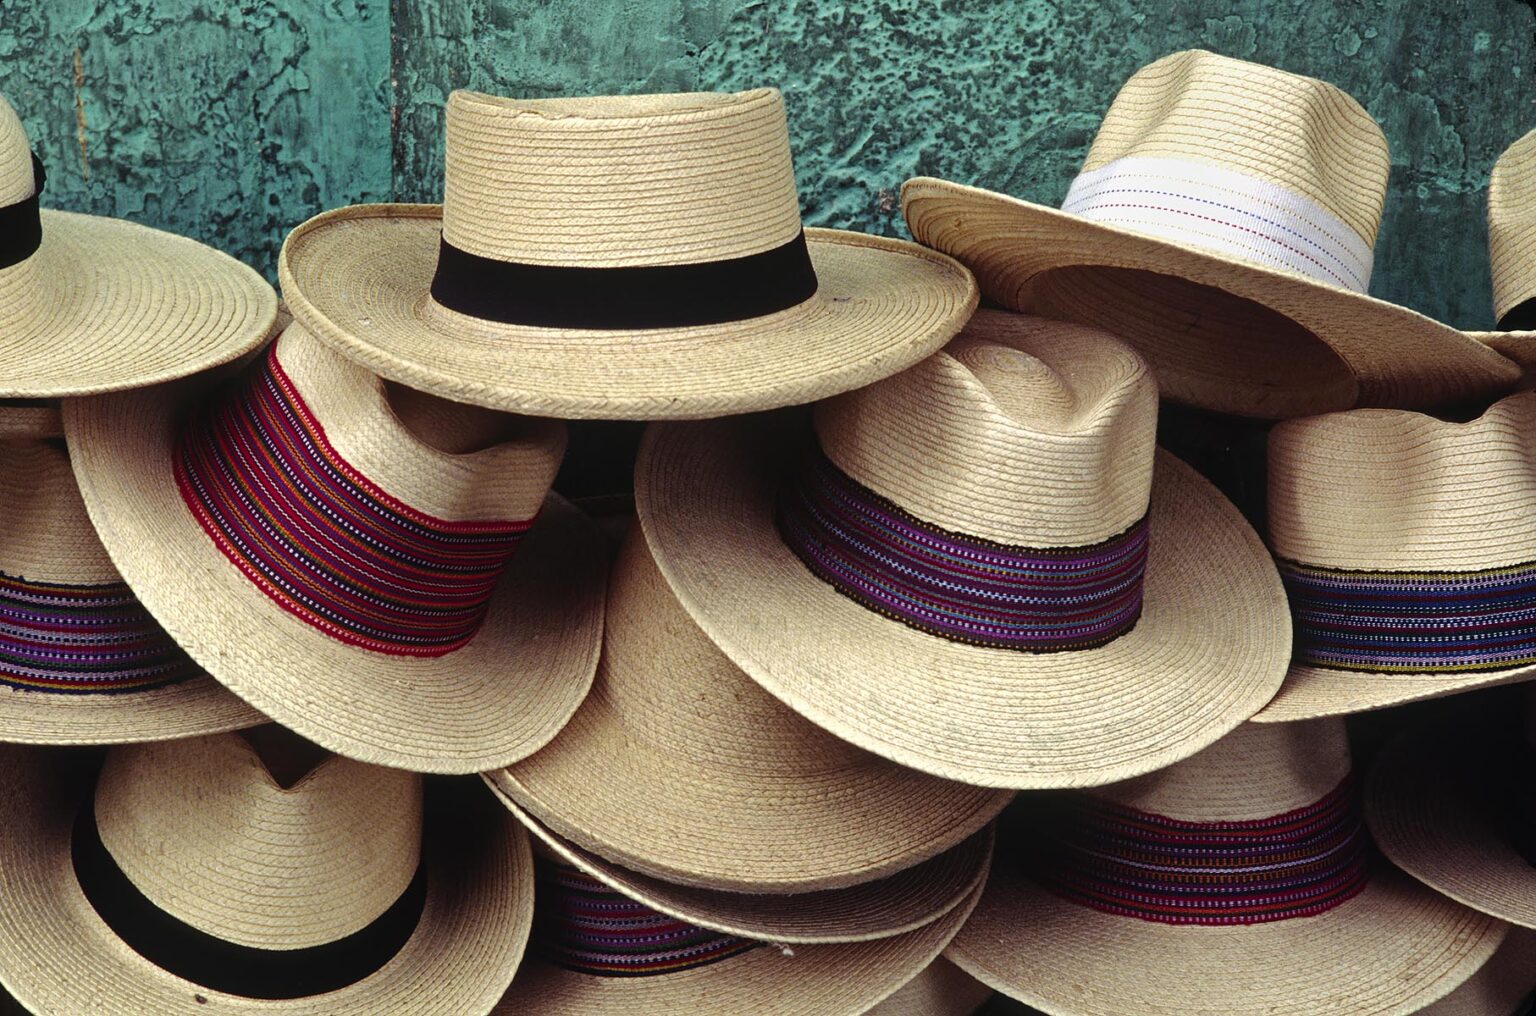 PANAMA HATS for sale in the streets during SEMANA SANTA (EASTER) - ANTIGUA, GUATEMALA